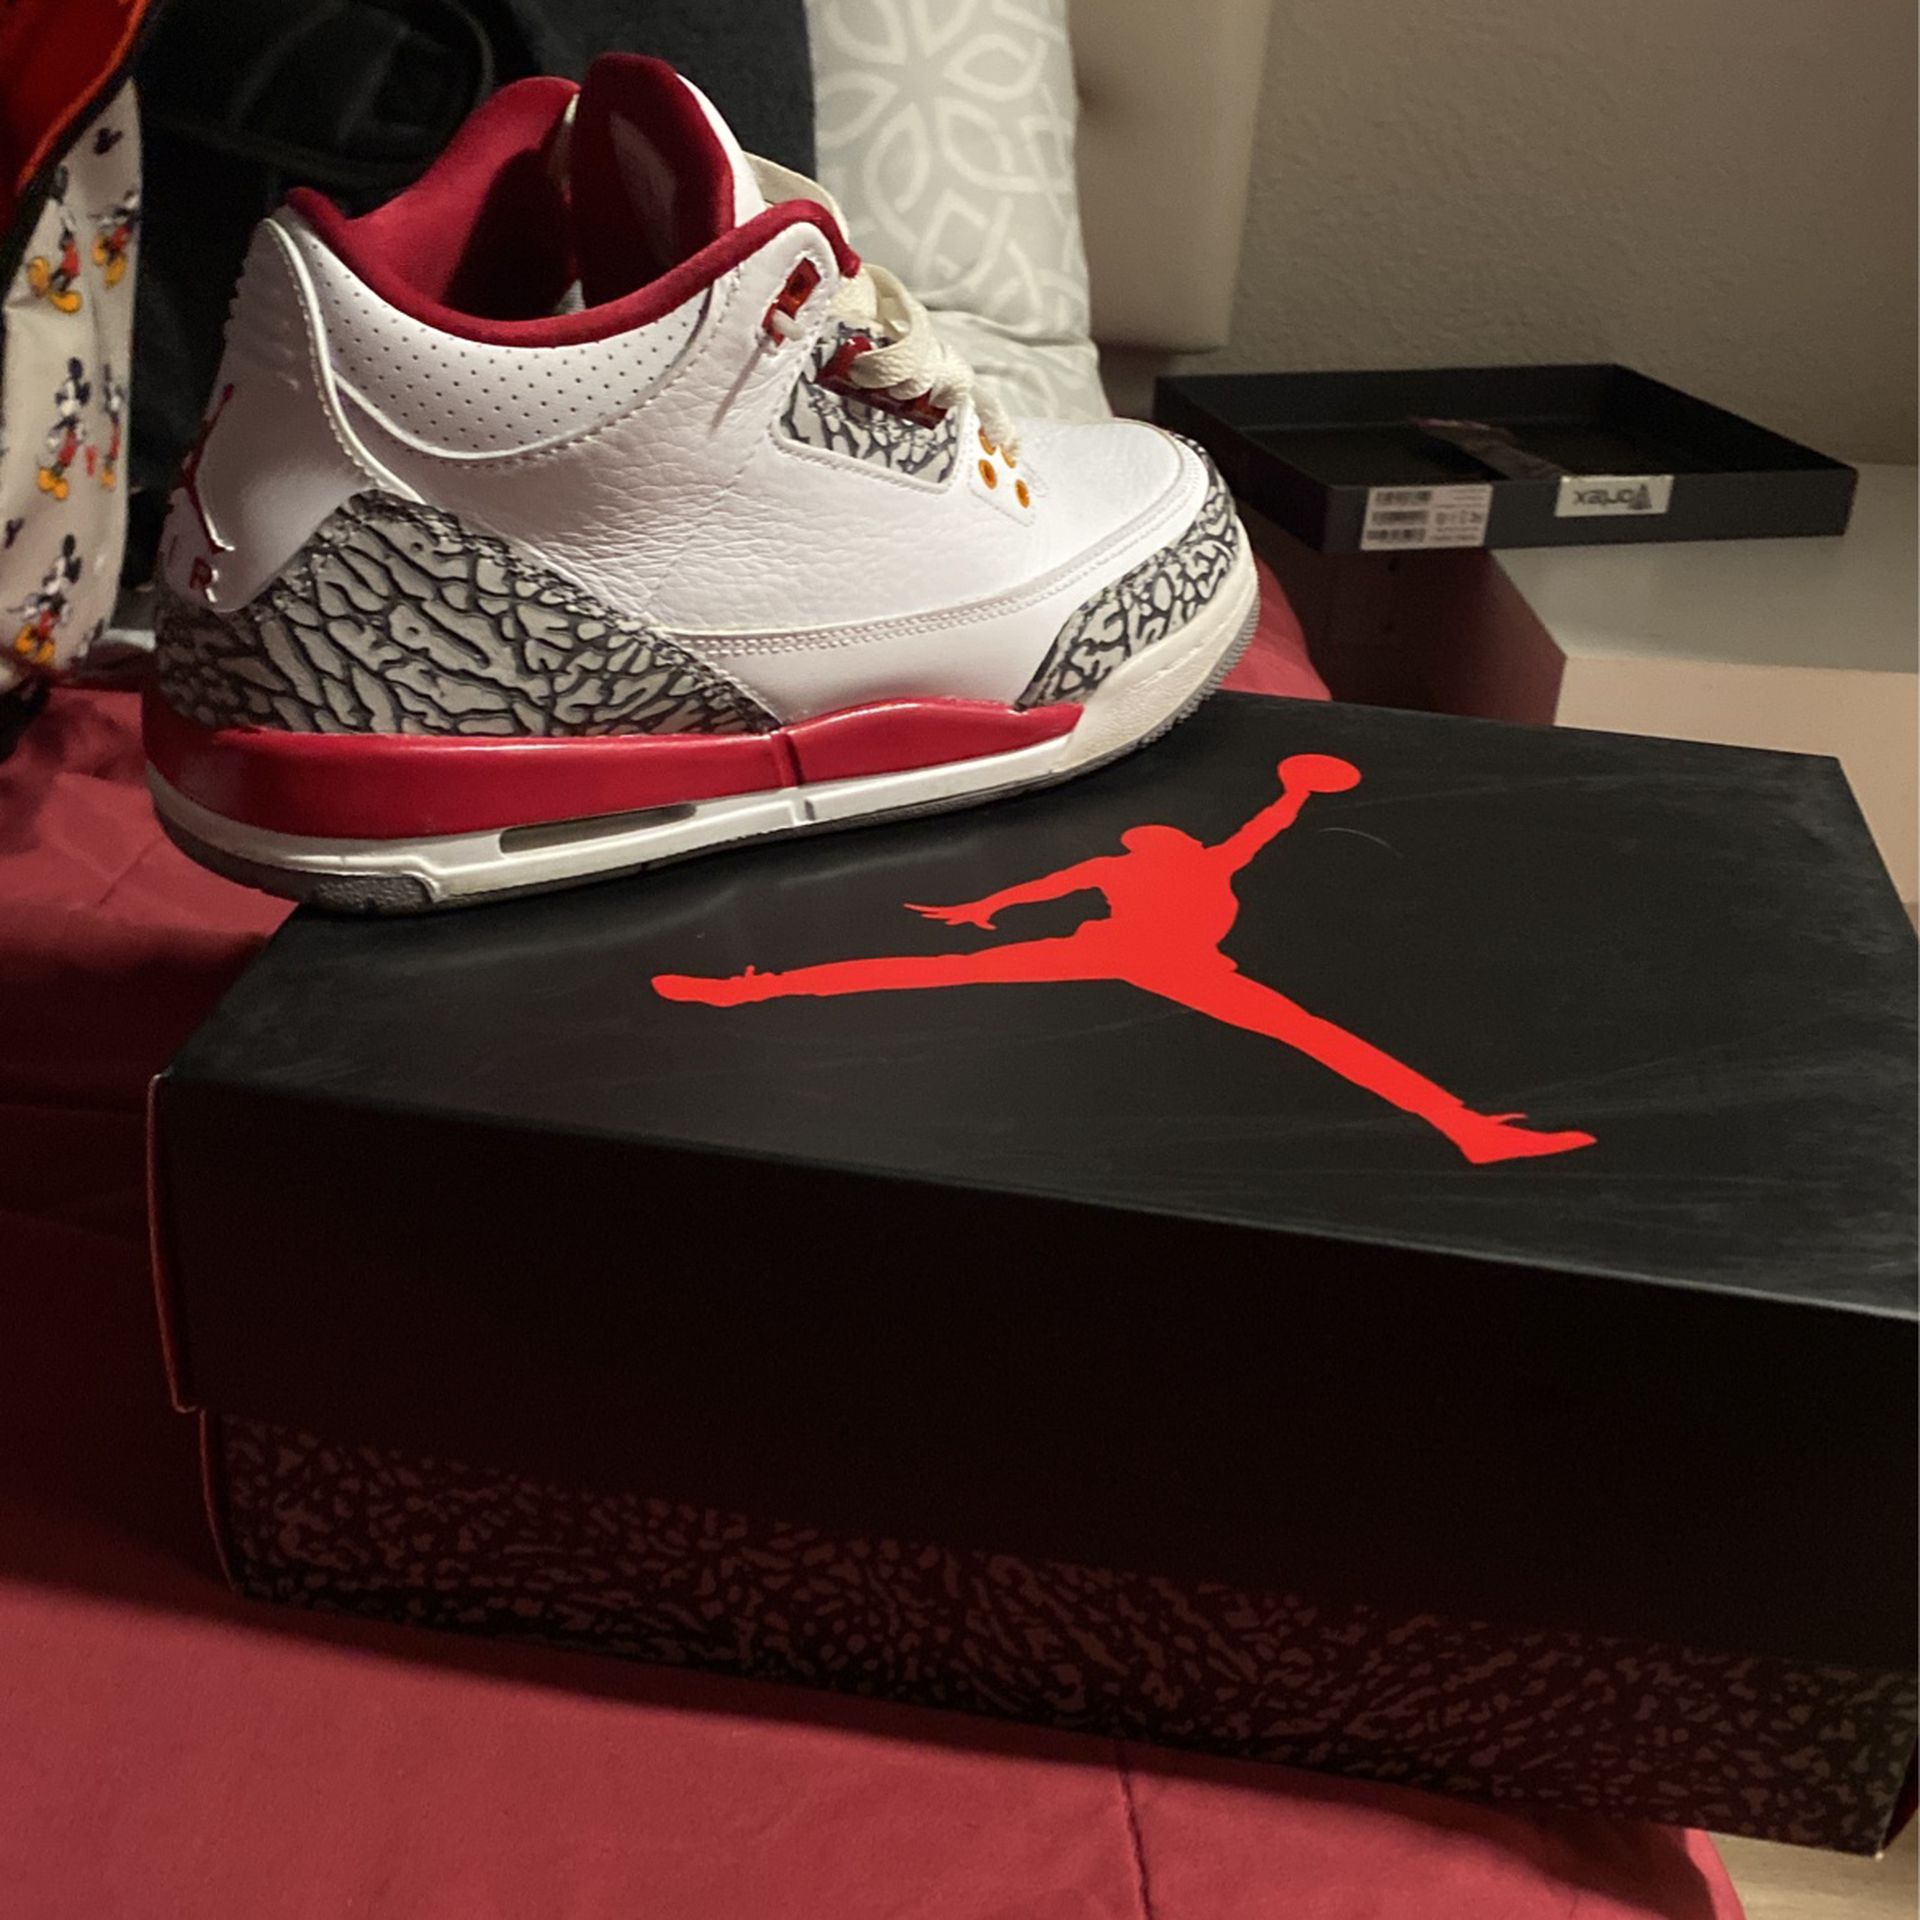 Air Jordan Retro 3s Size 7 